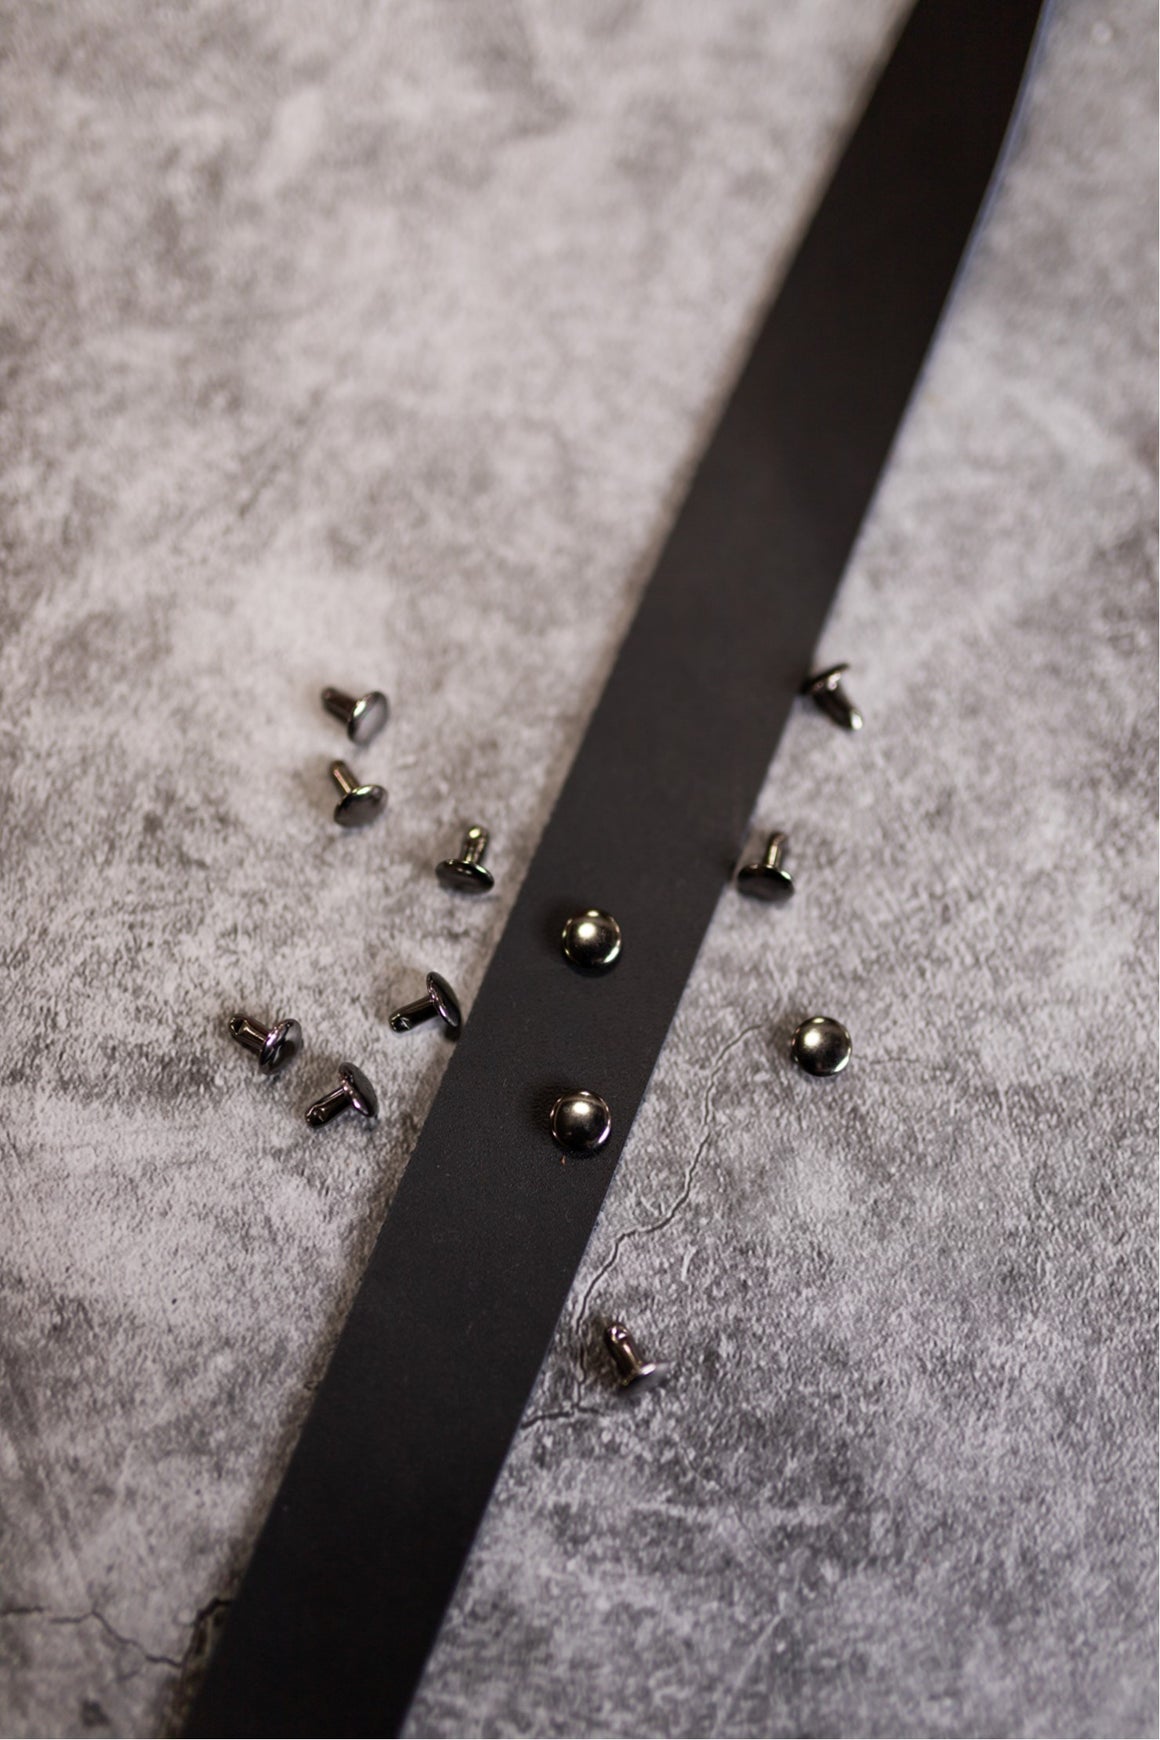 Leather Strap 1" x 54" - Black